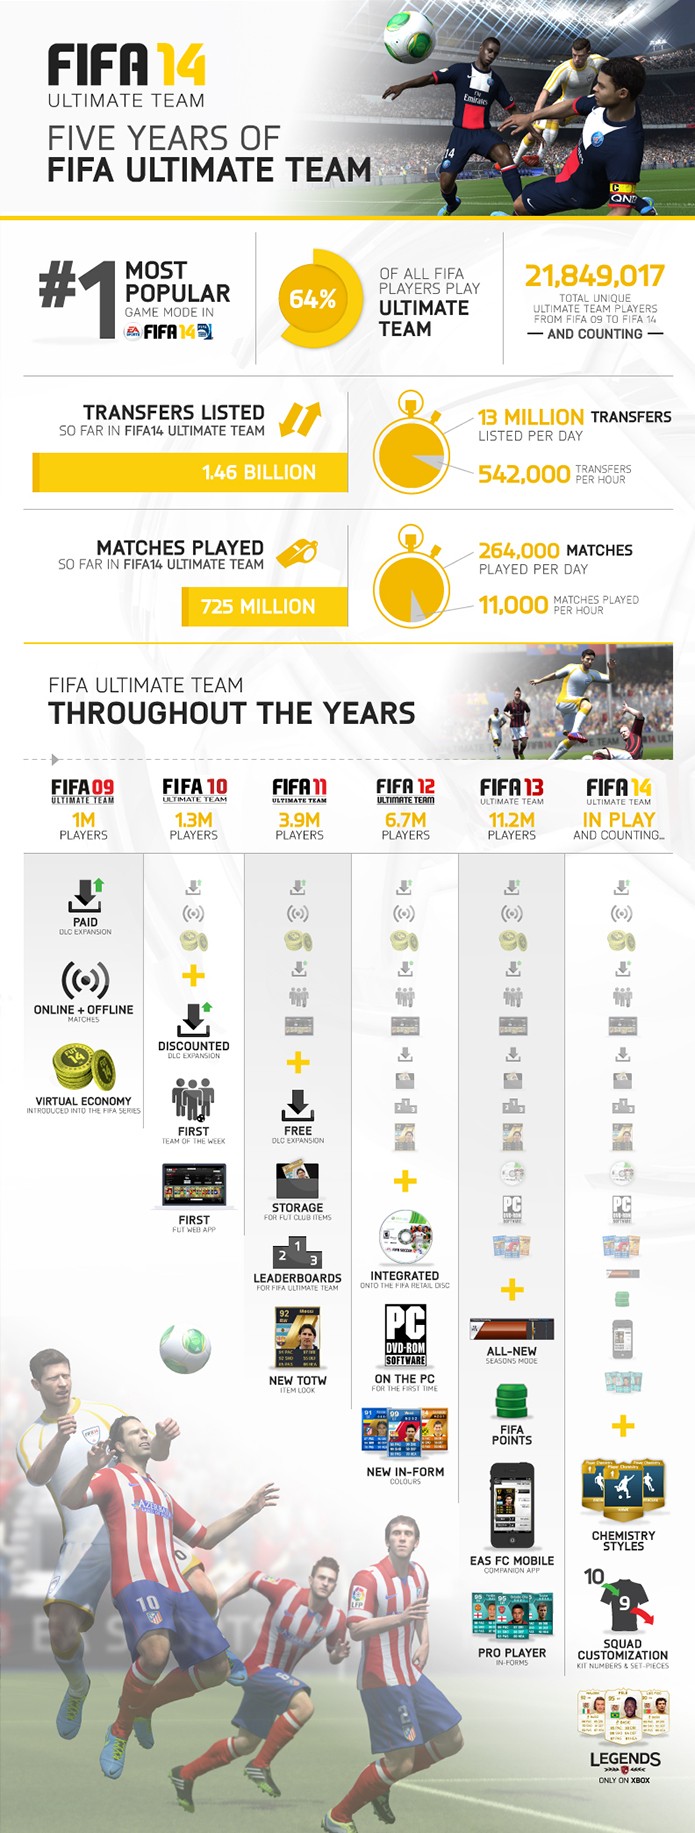 fifa-14-fut-infographic.jpg